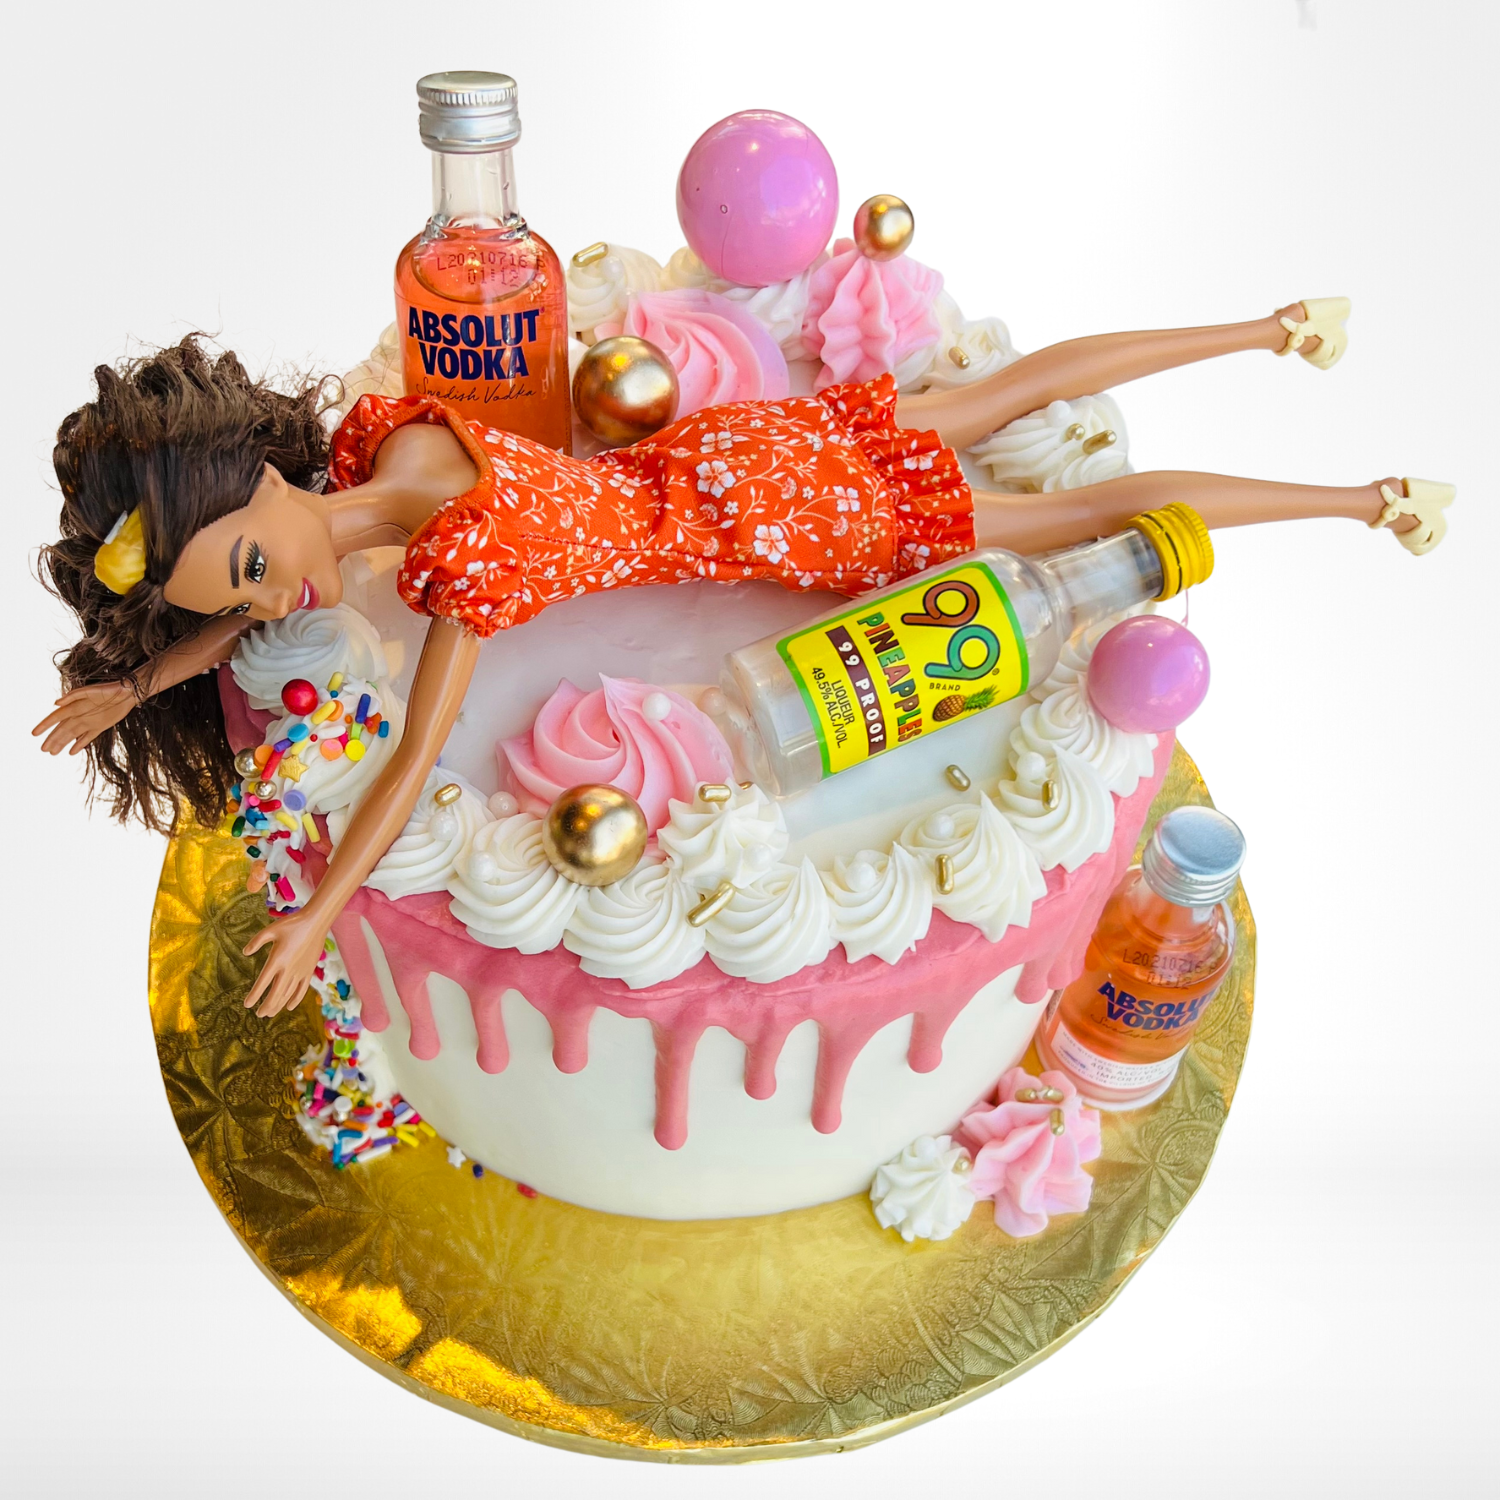 happy 21st birthday cake barbie